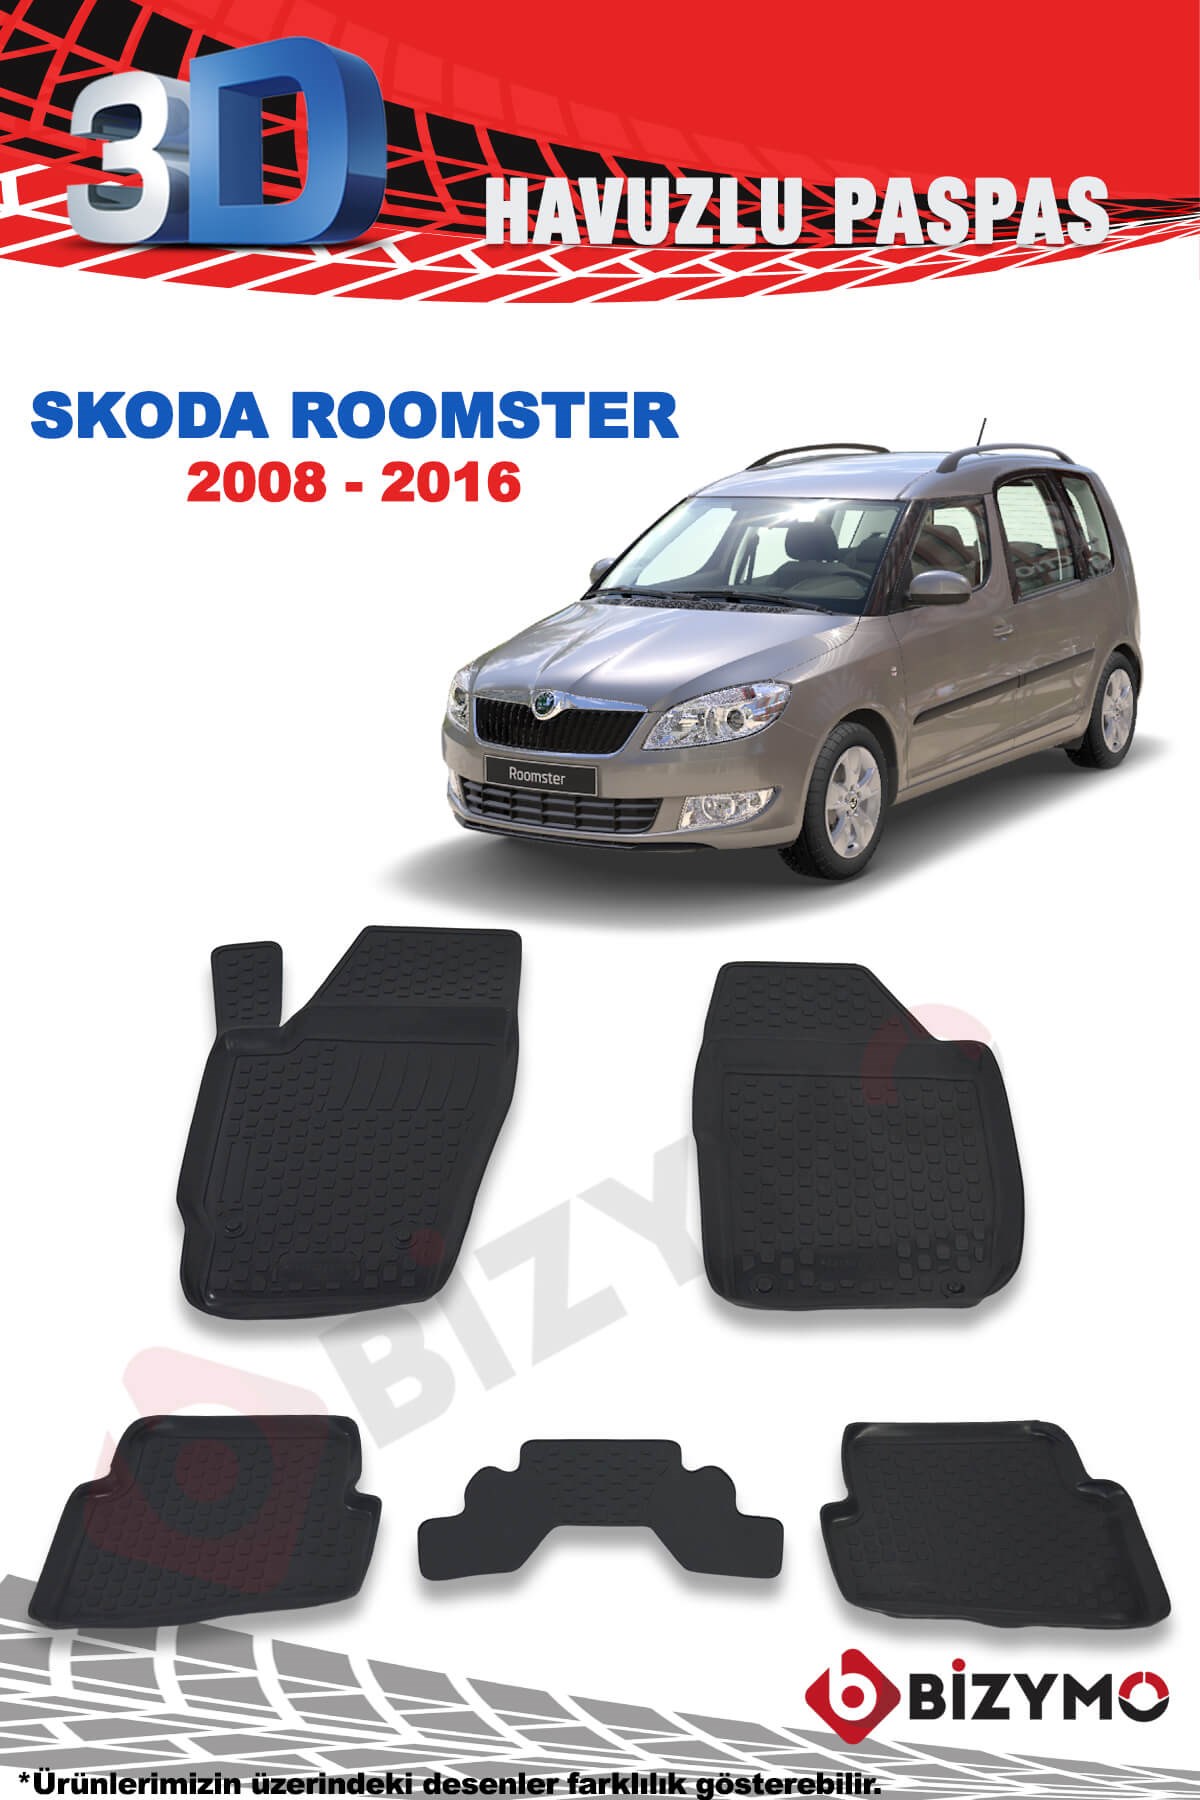 Skoda Roomster 2008-2016 3D Paspas Takımı Bizymo - Bizim Oto